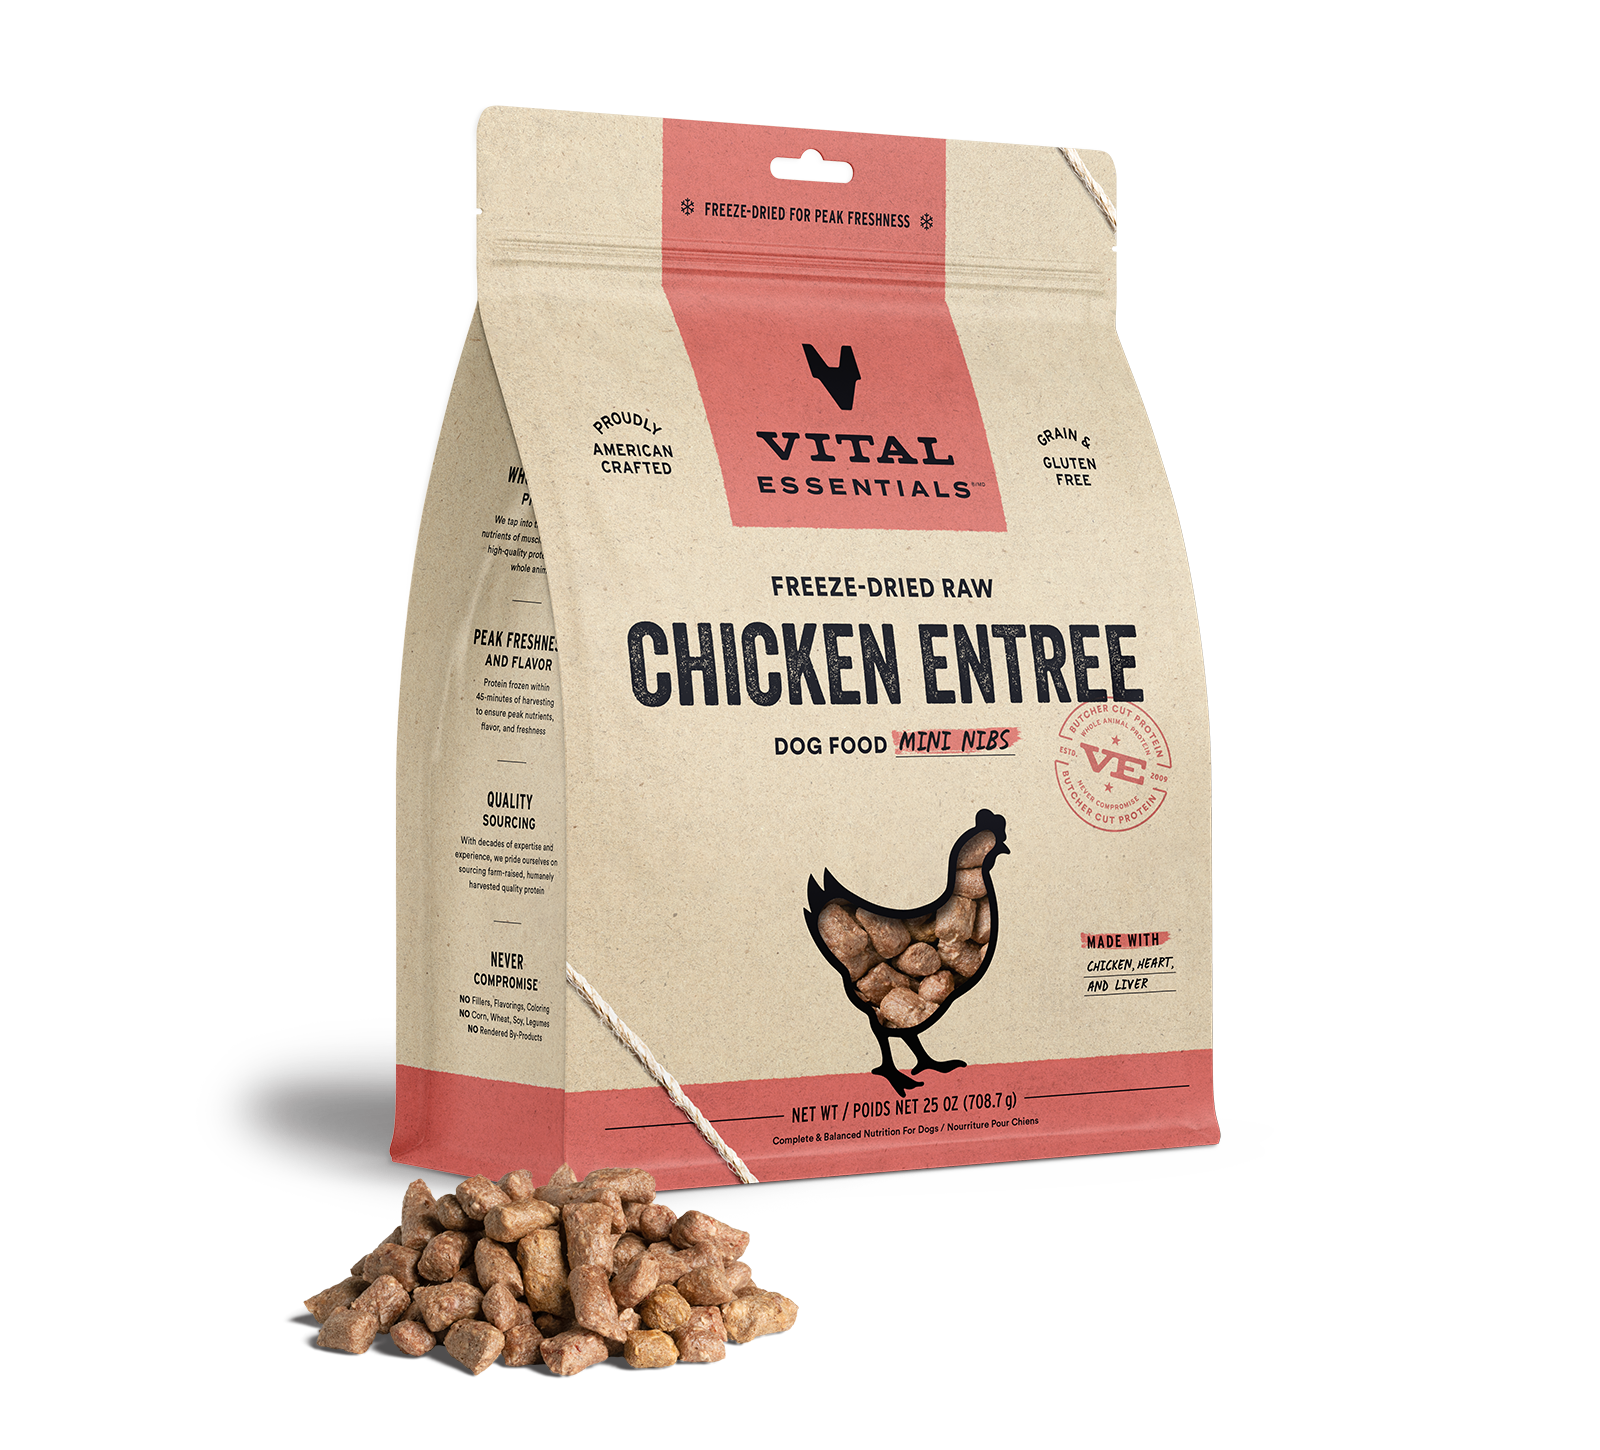 Vital Essentials Freeze-Dried Raw Chicken Entree Dog Food Mini Nibs, 25 oz - Health/First Aid